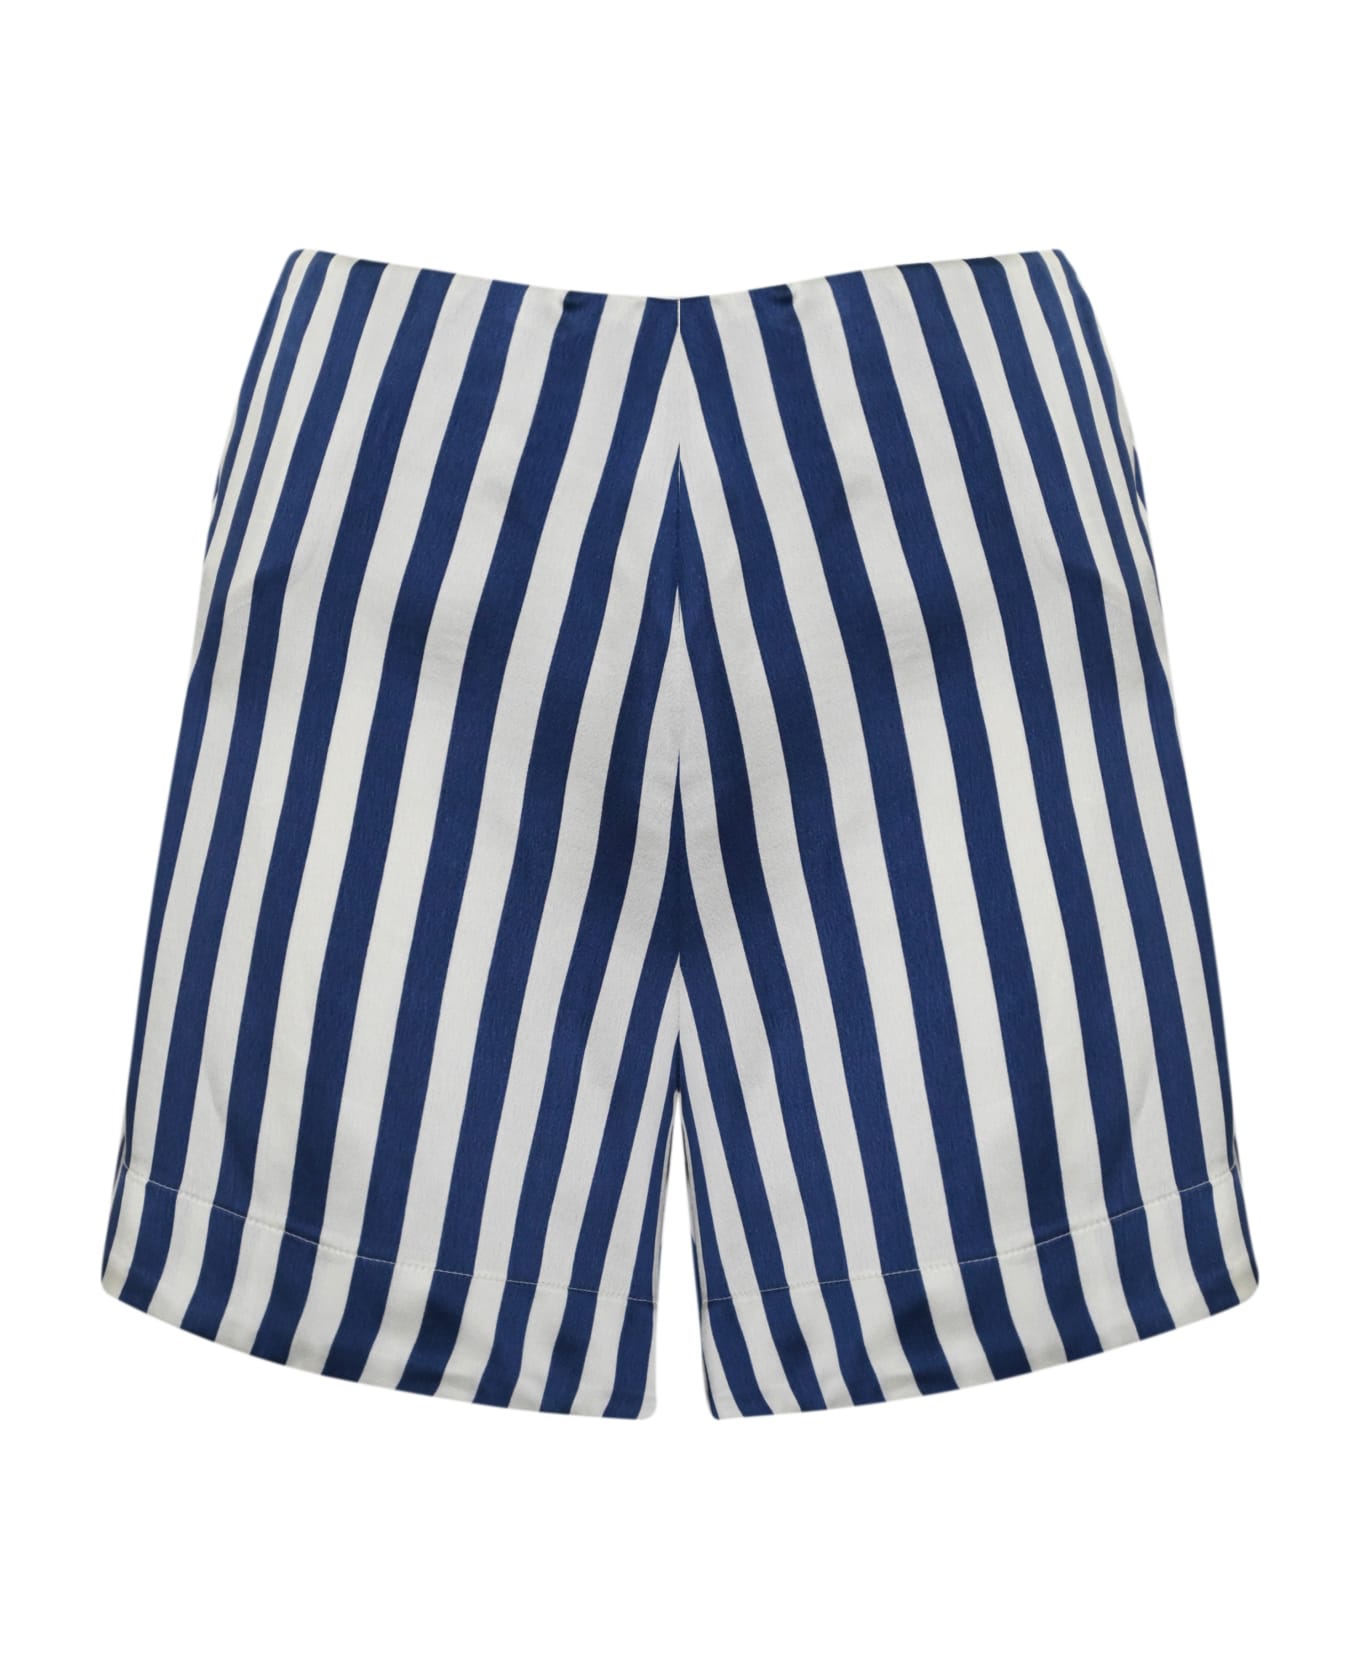 MVP Wardrobe Le Galion Shorts In Viscose - Cream/deep blue ショートパンツ